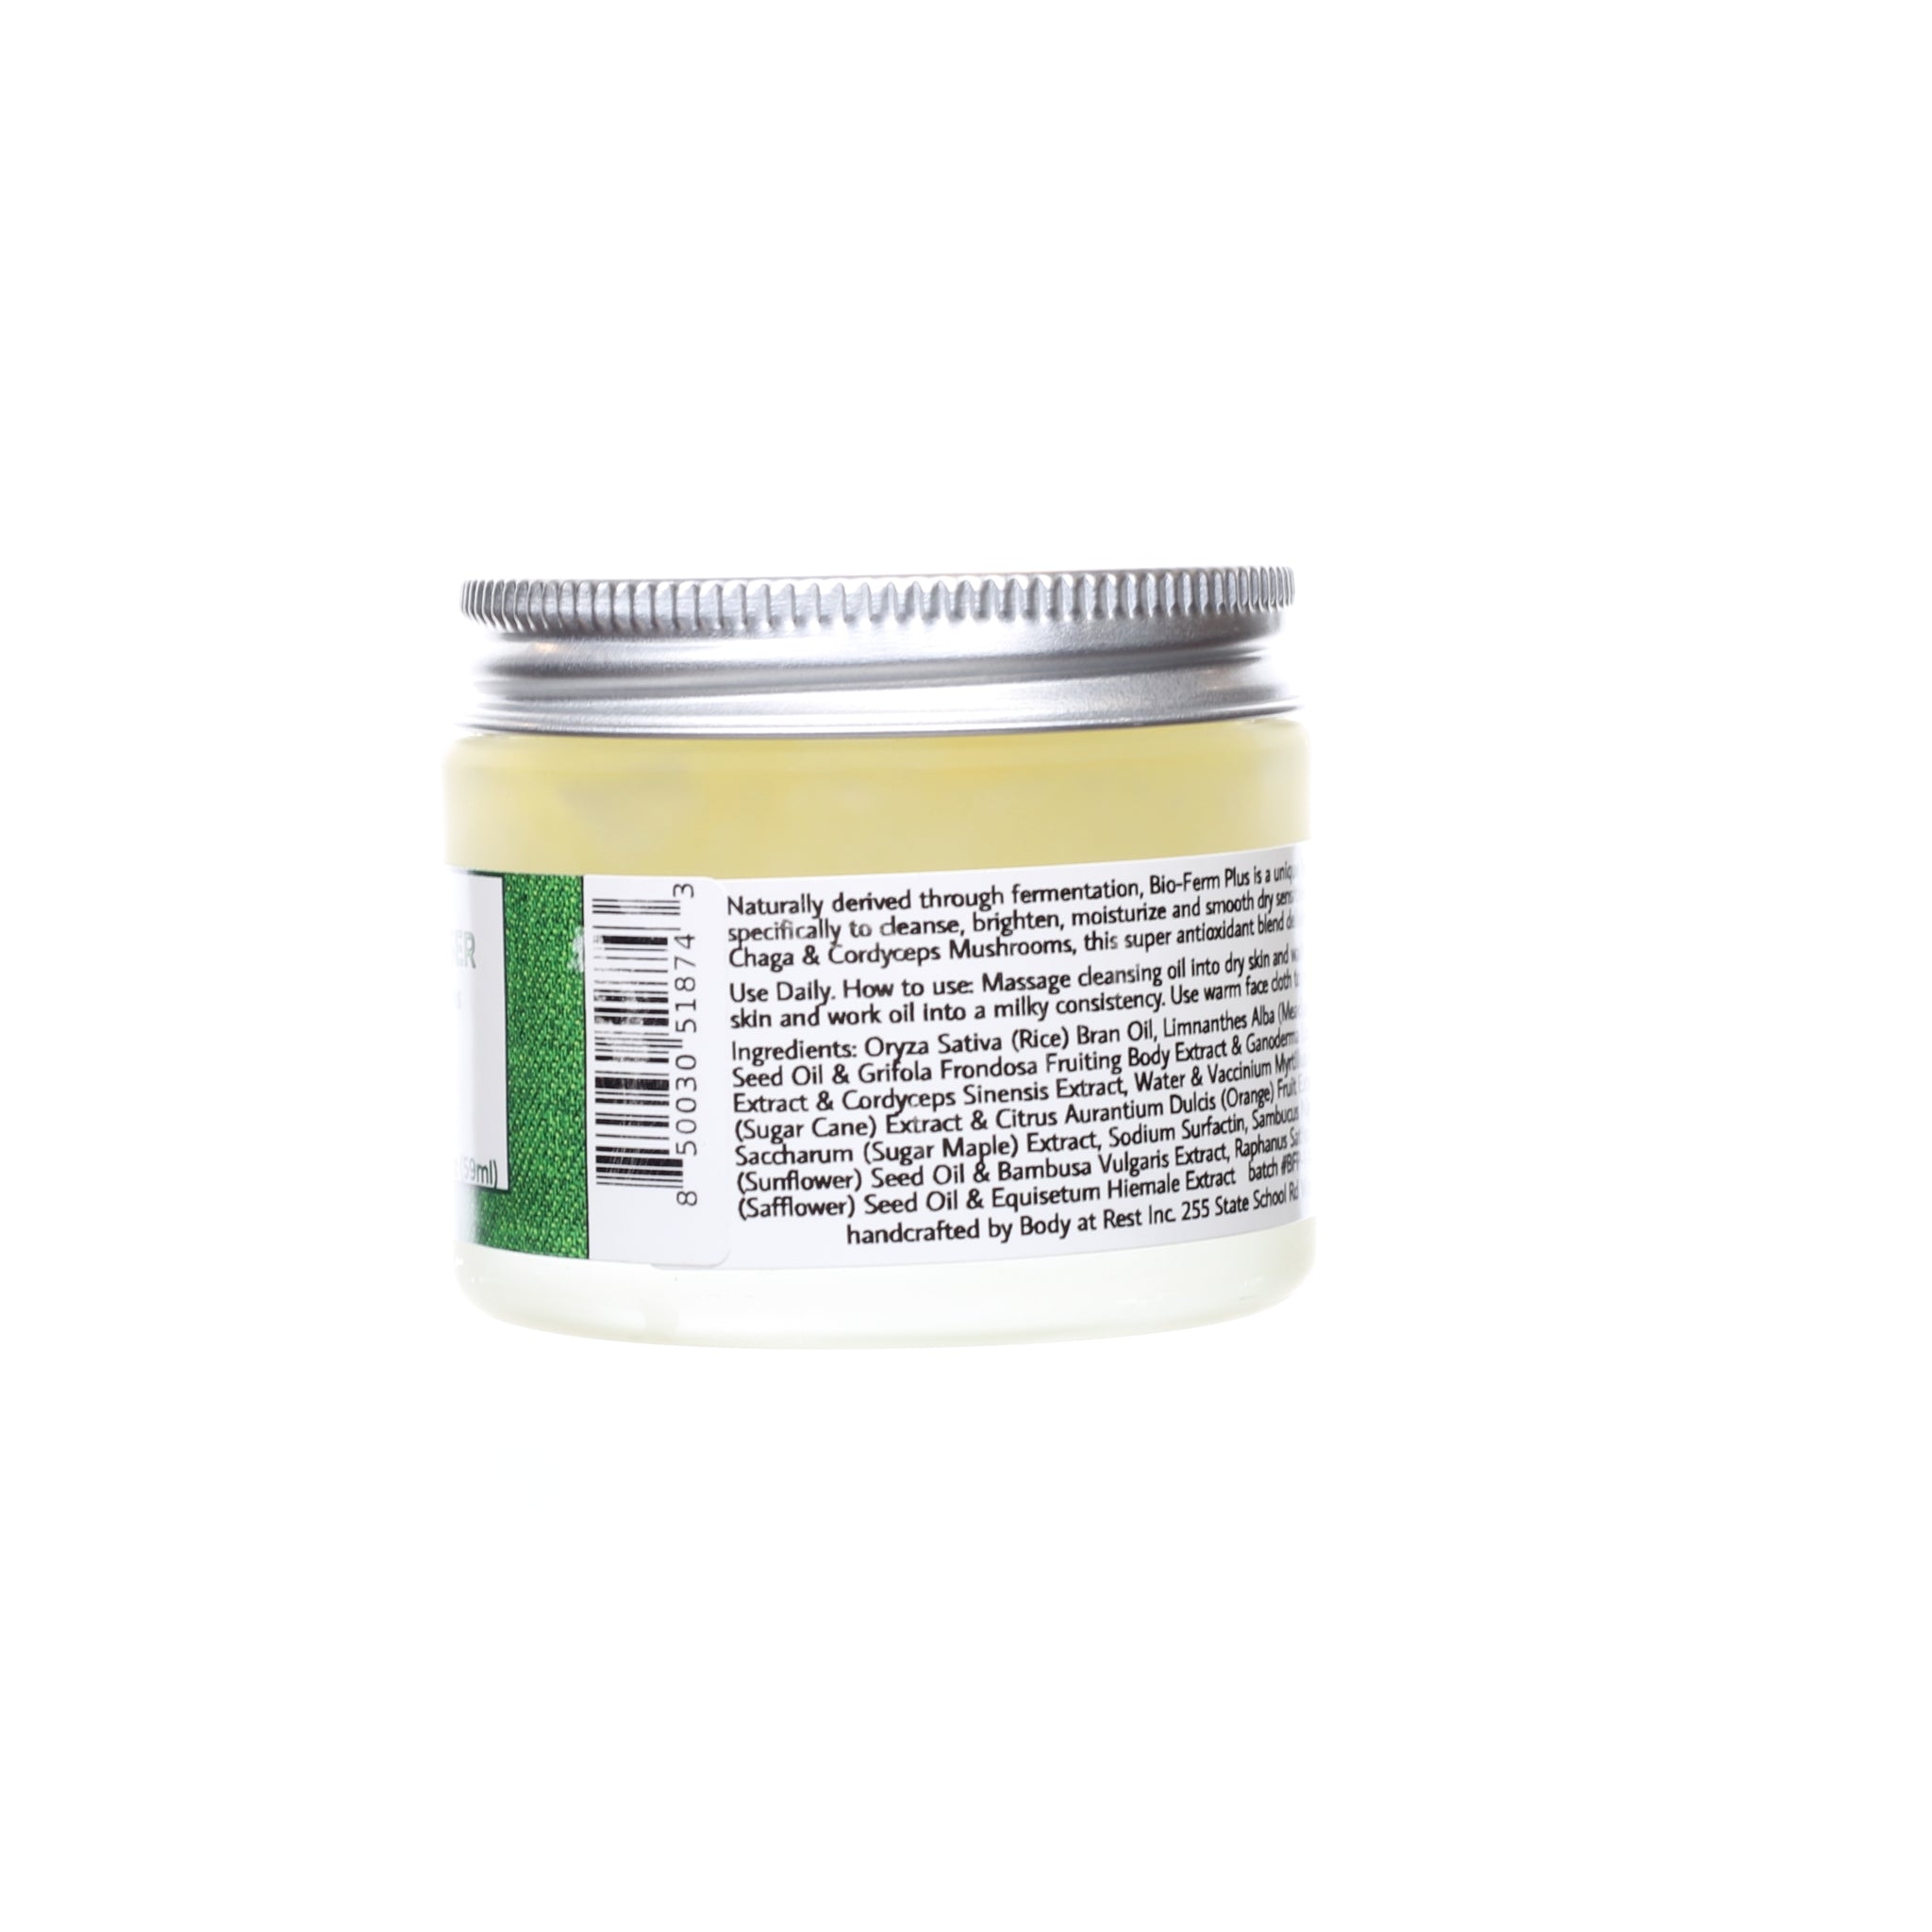 Farmbody Bio-Ferm-Plus Oil Gel Cleanser Mushroom Skincare Chaga Reishi Maitake Cordyseps for Dry Skin Unscented Ingredients